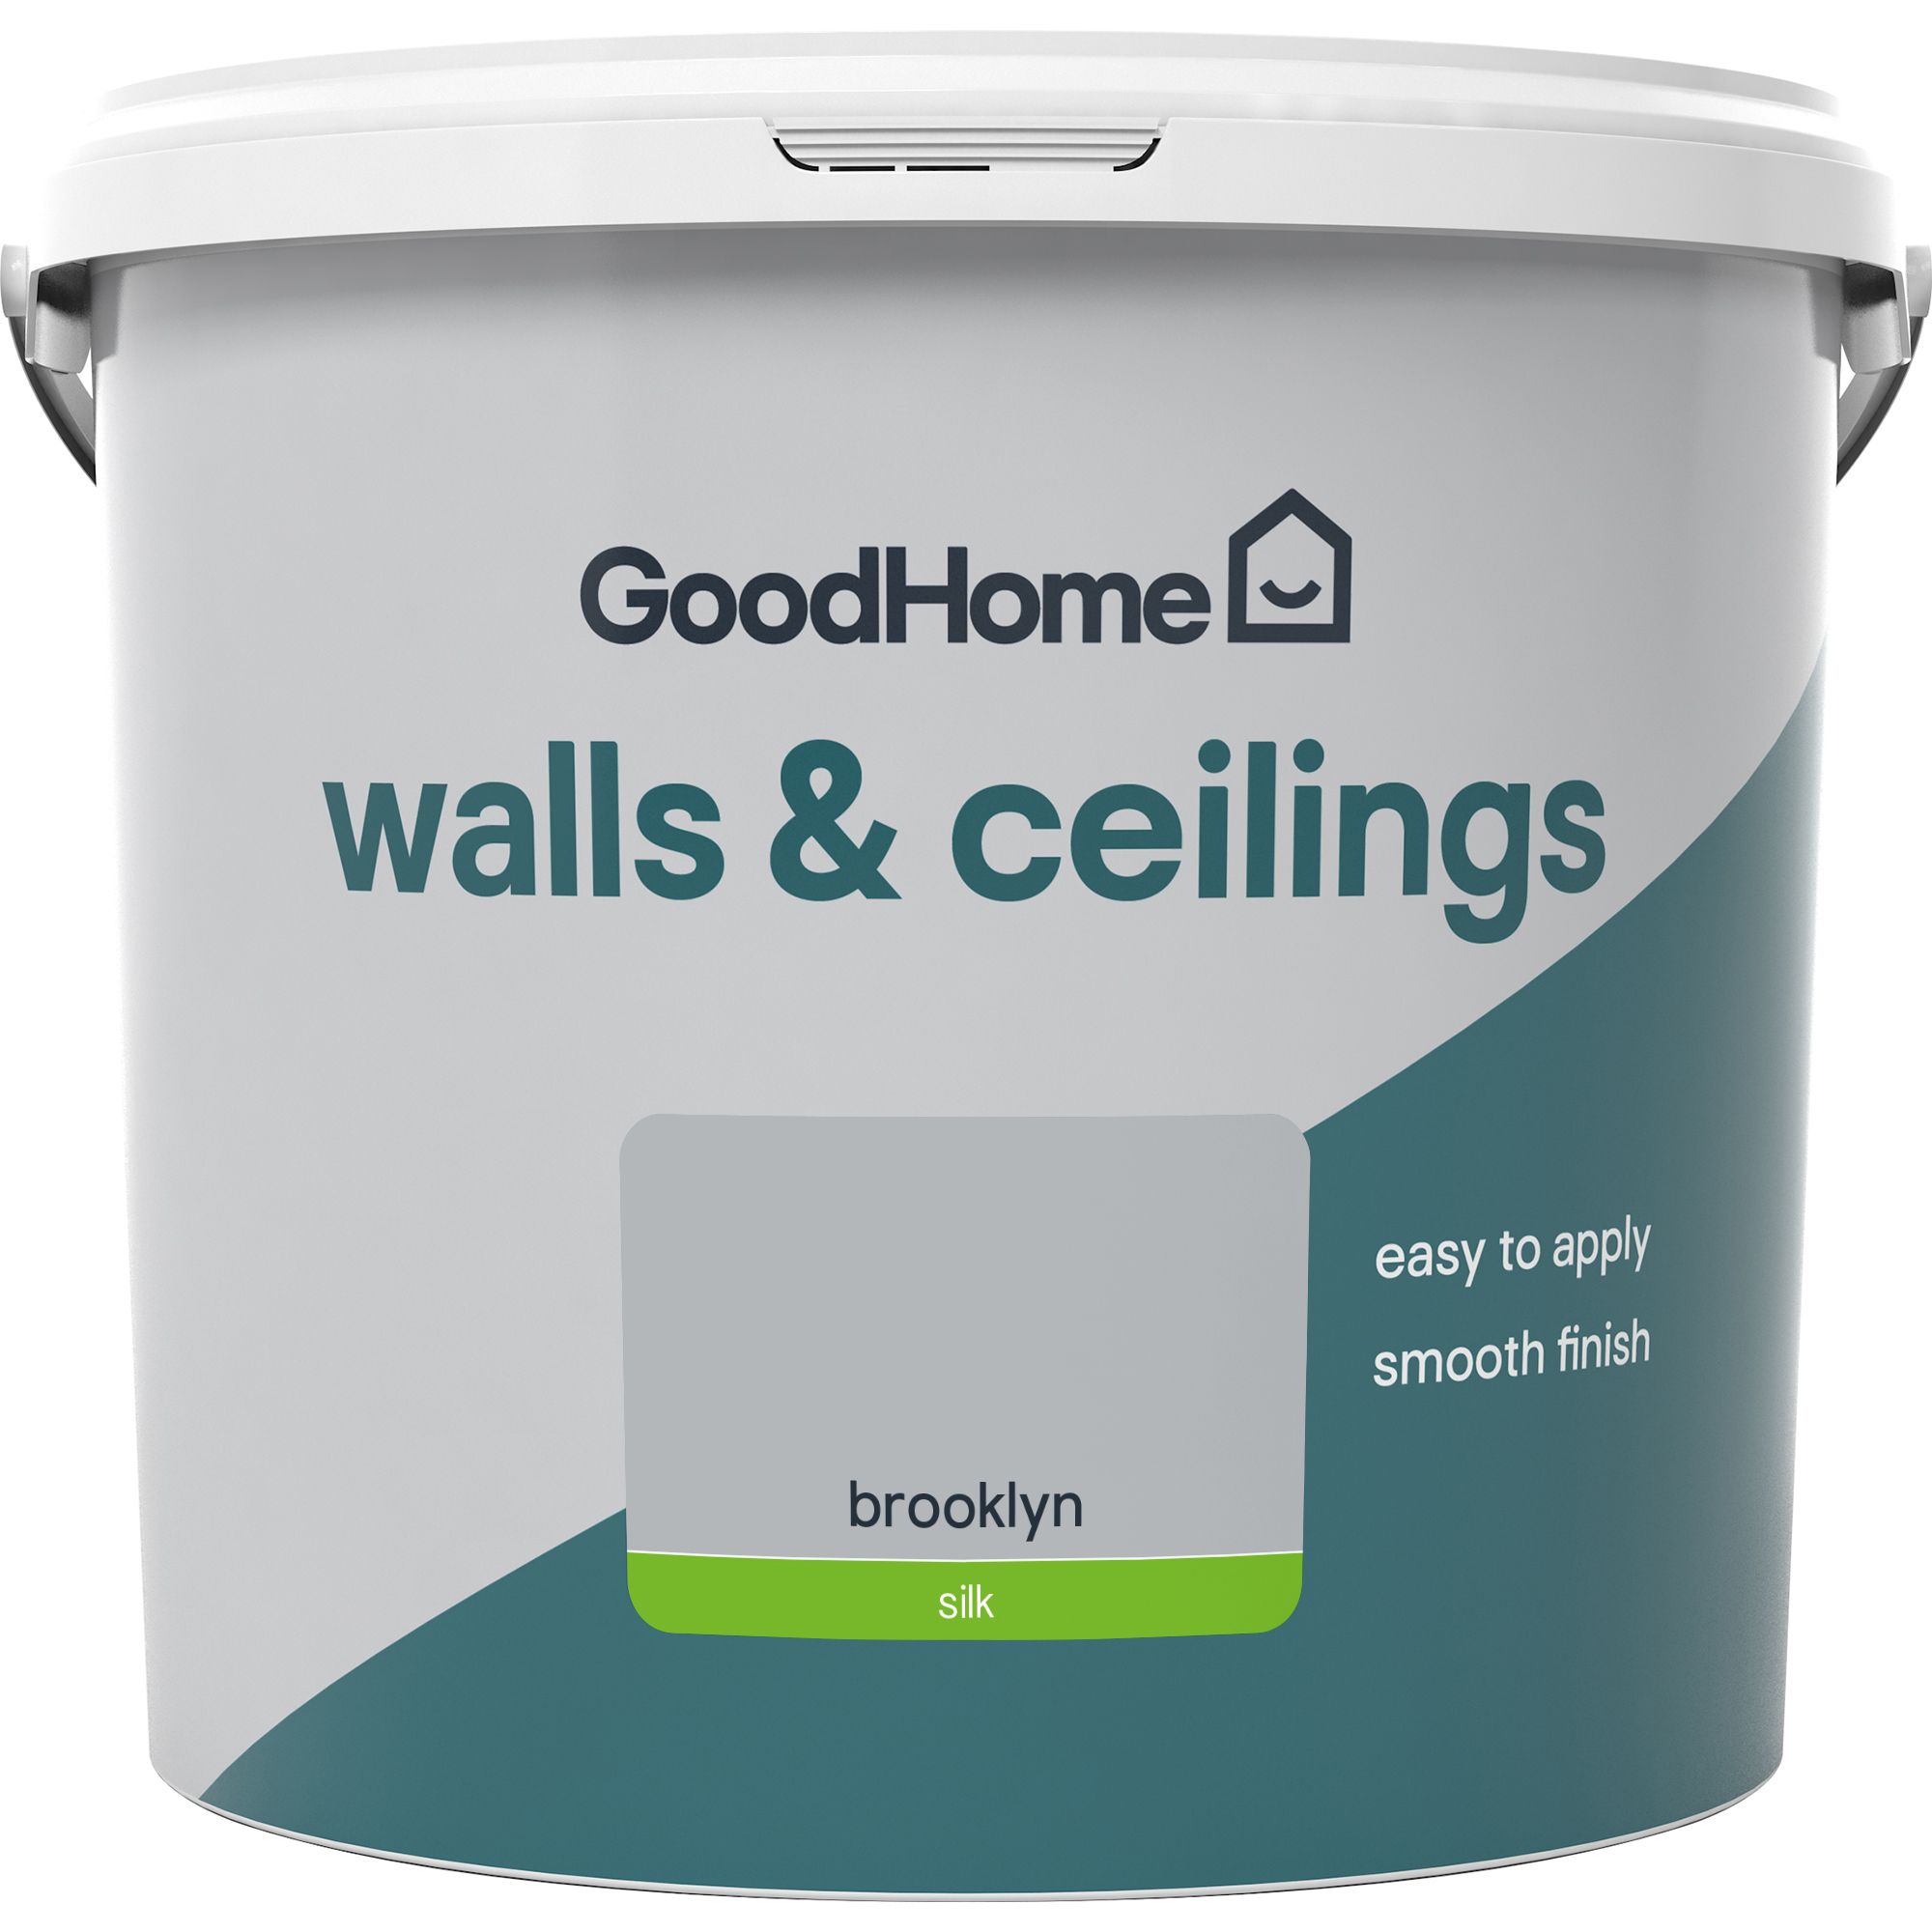 GoodHome Walls & ceilings Brooklyn Silk Emulsion paint, 5L